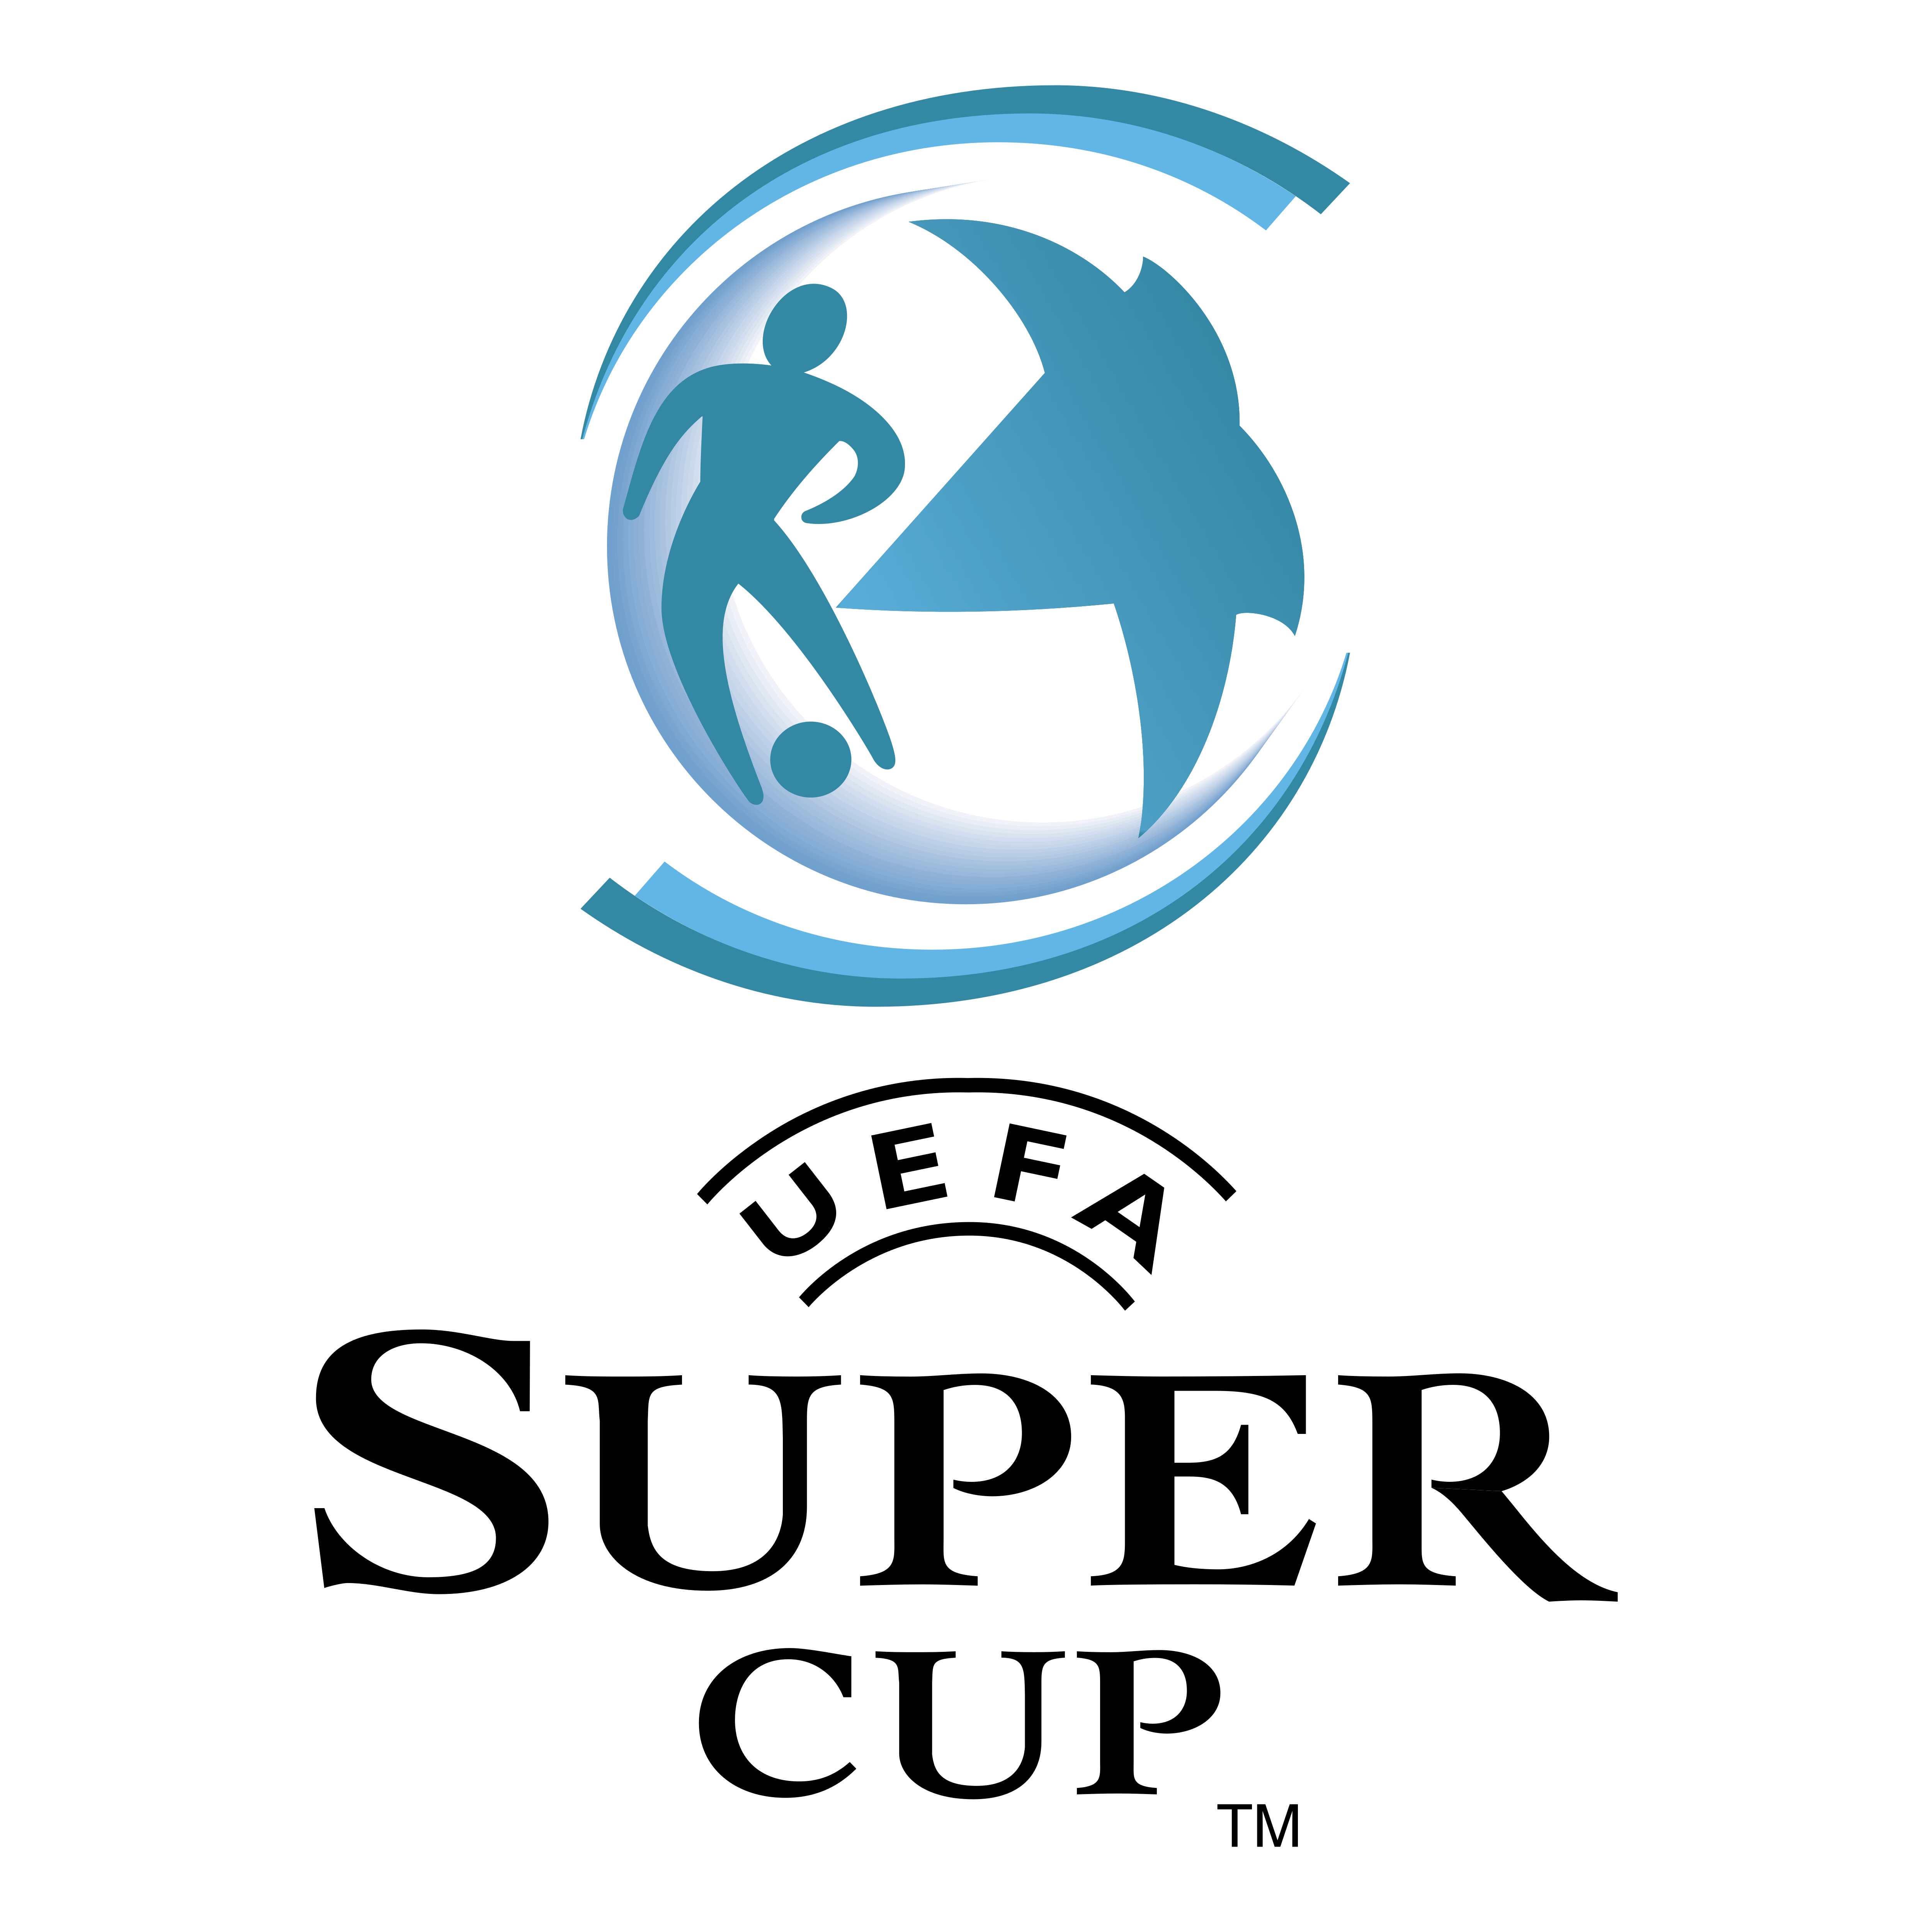 UEFA Super cup - Logos Download